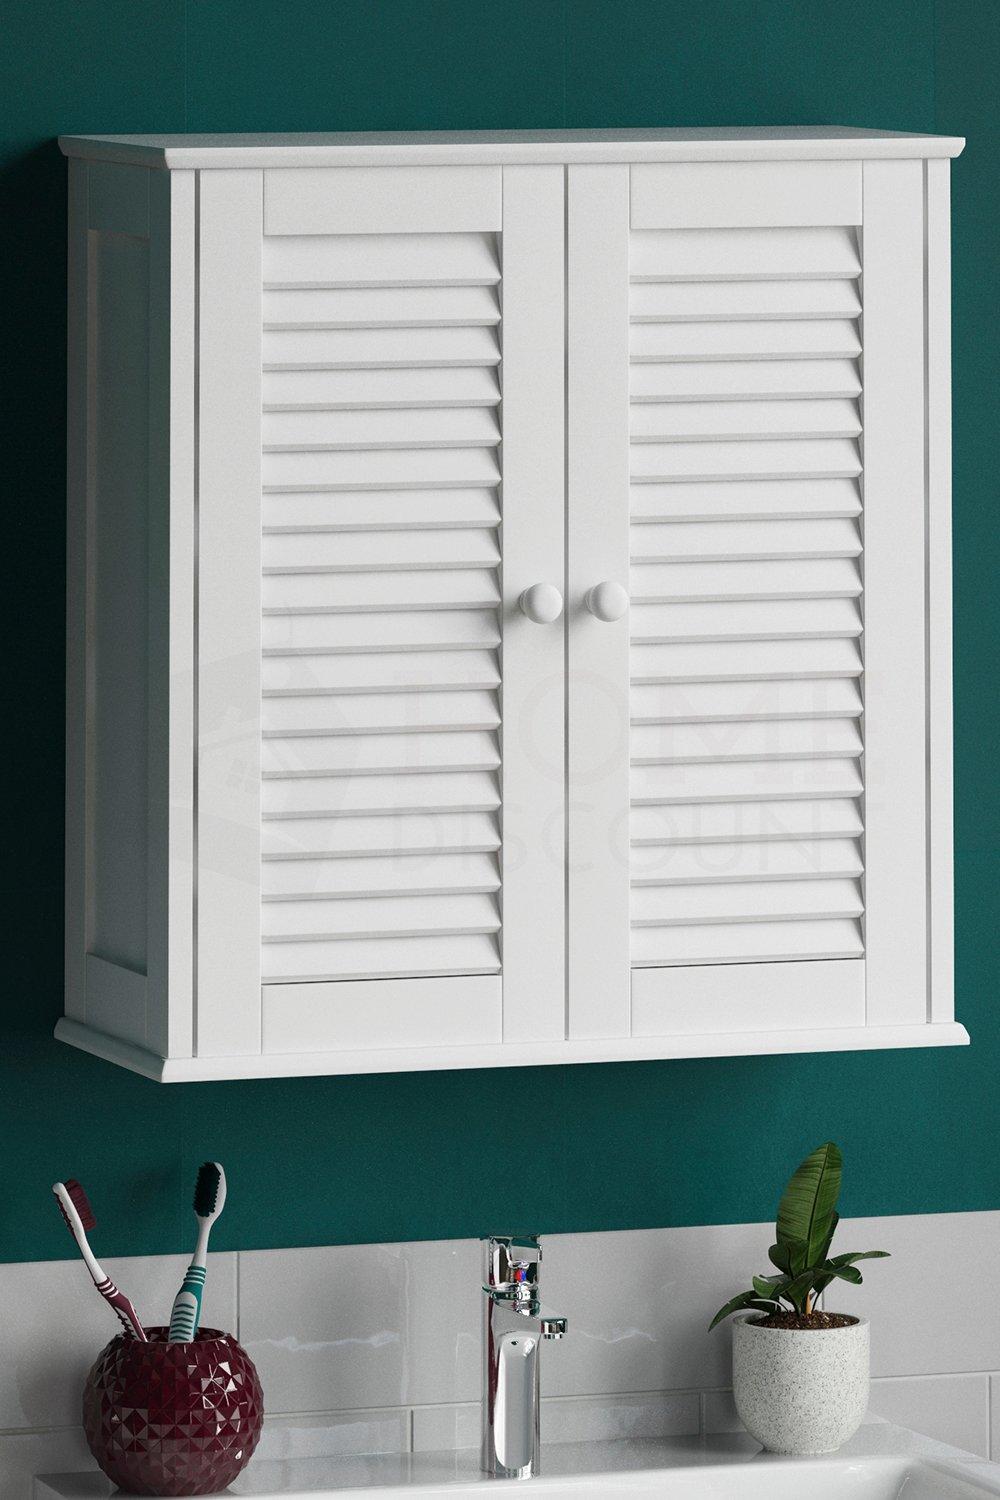 Bathroom Furniture | Bath Vida Liano 2 Door Wall Cabinet with Shelves Bathroom Storage | Home Discount